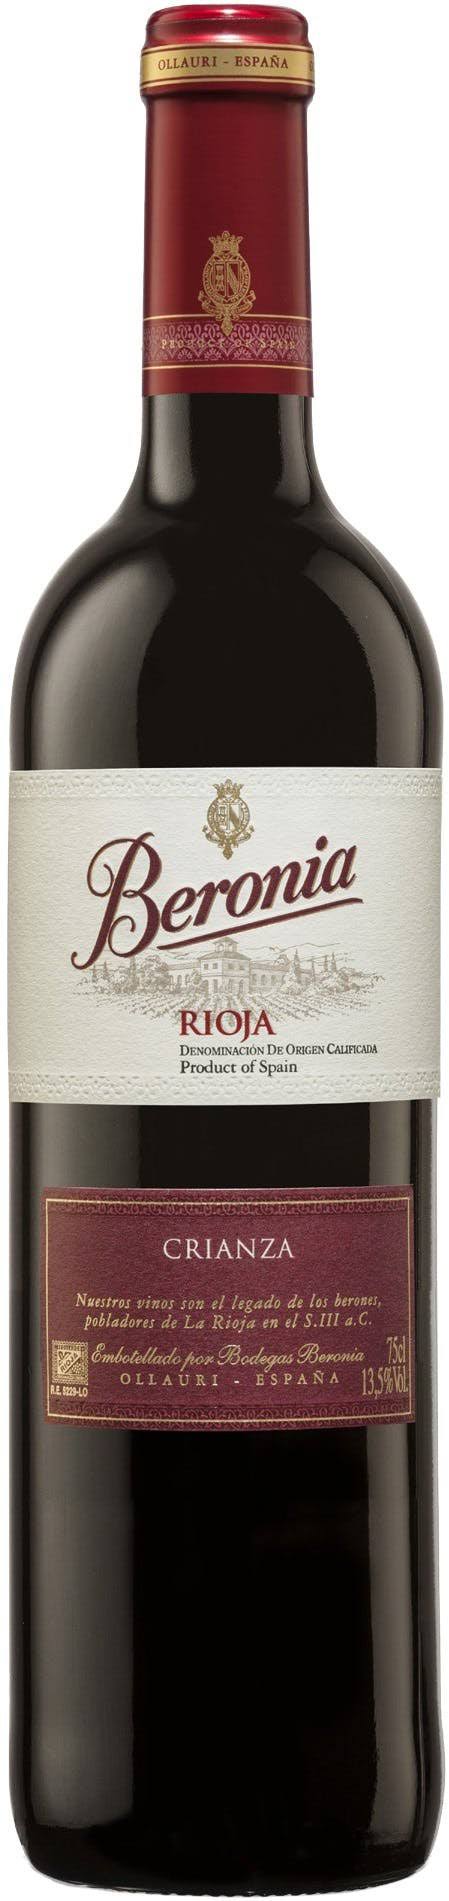 Beronia Rioja Crianza 2017 Half Bottle 375ml Red Wine